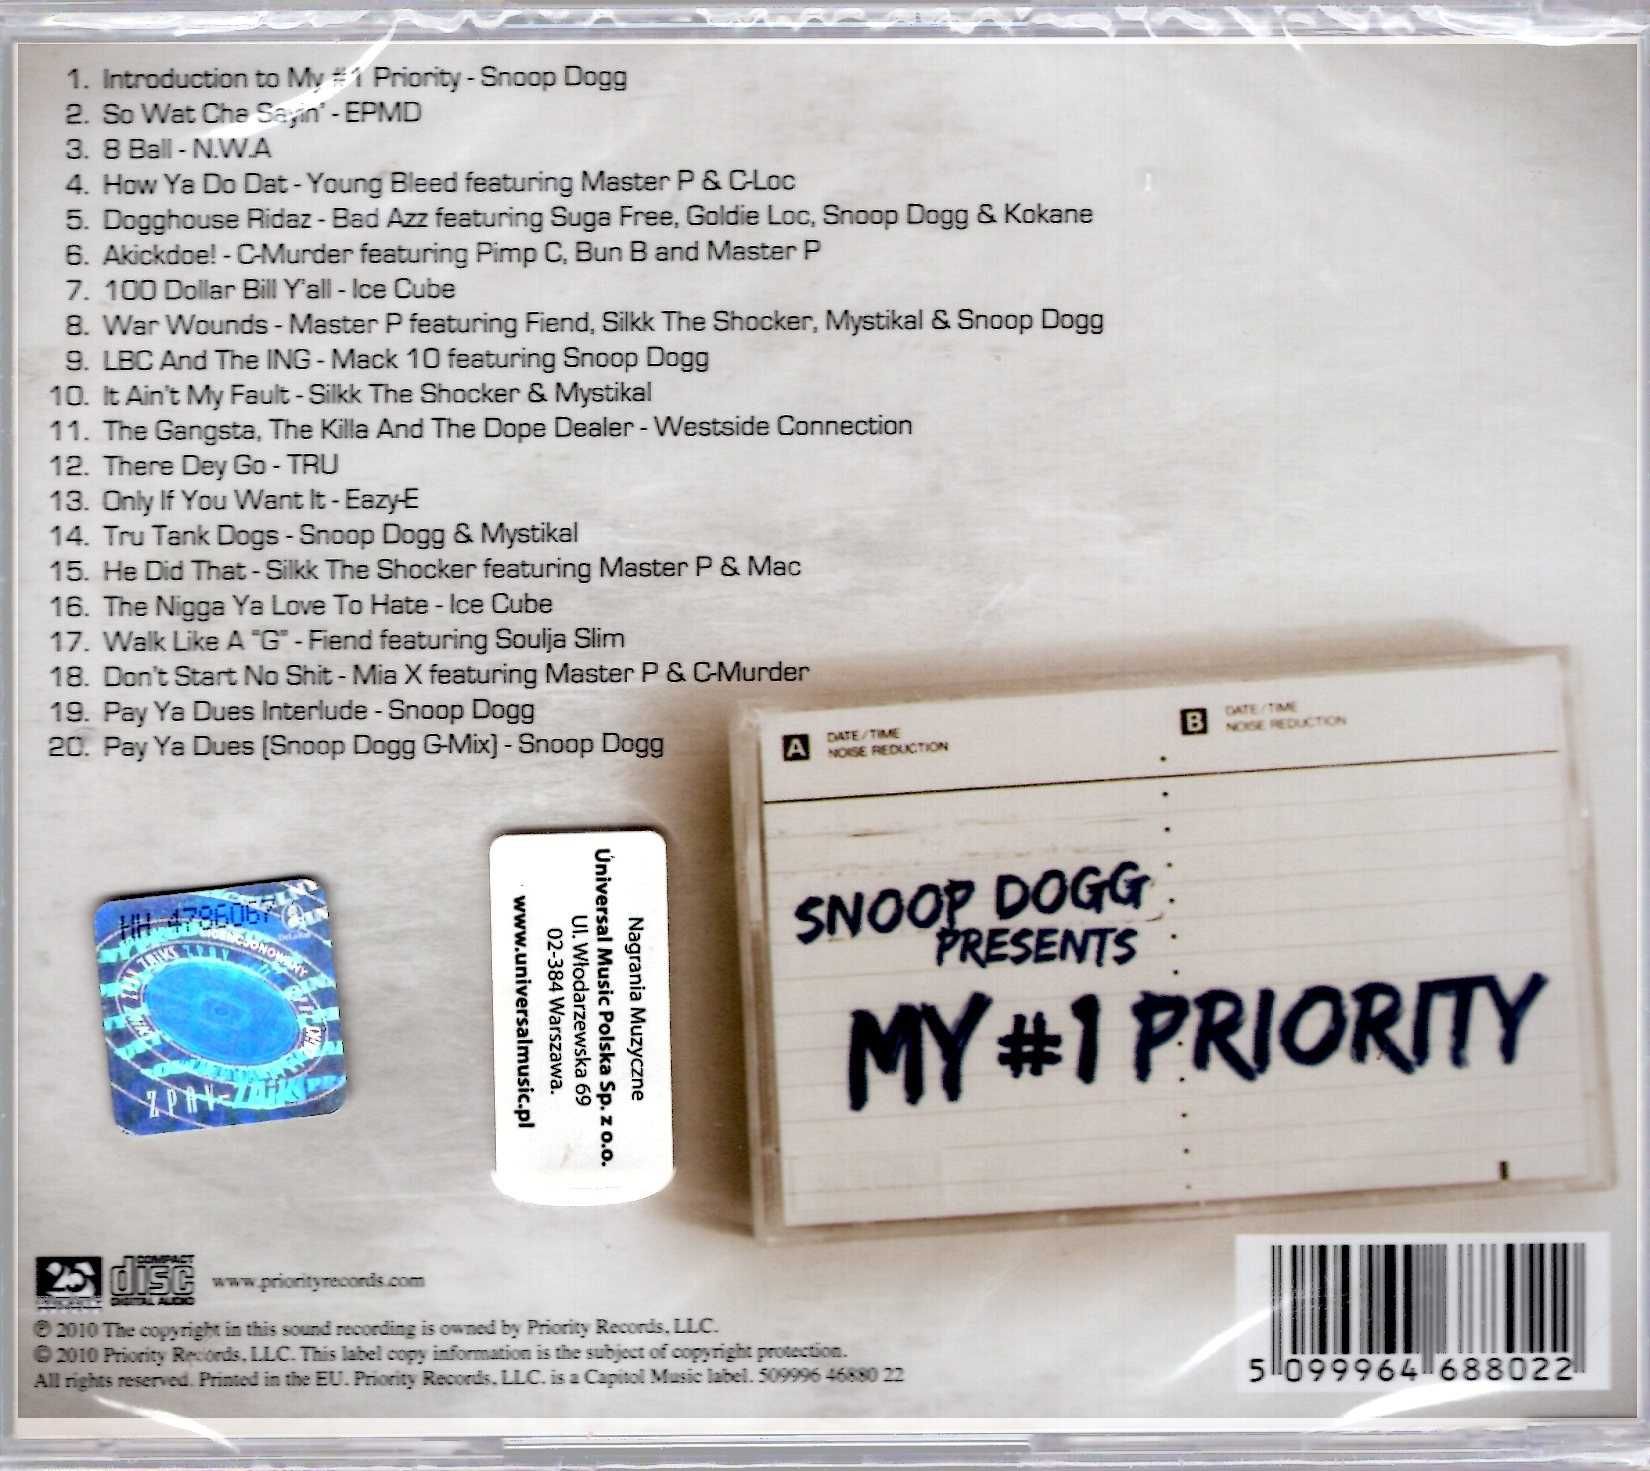 Snoop Dogg Presents My #1 Priority (CD)